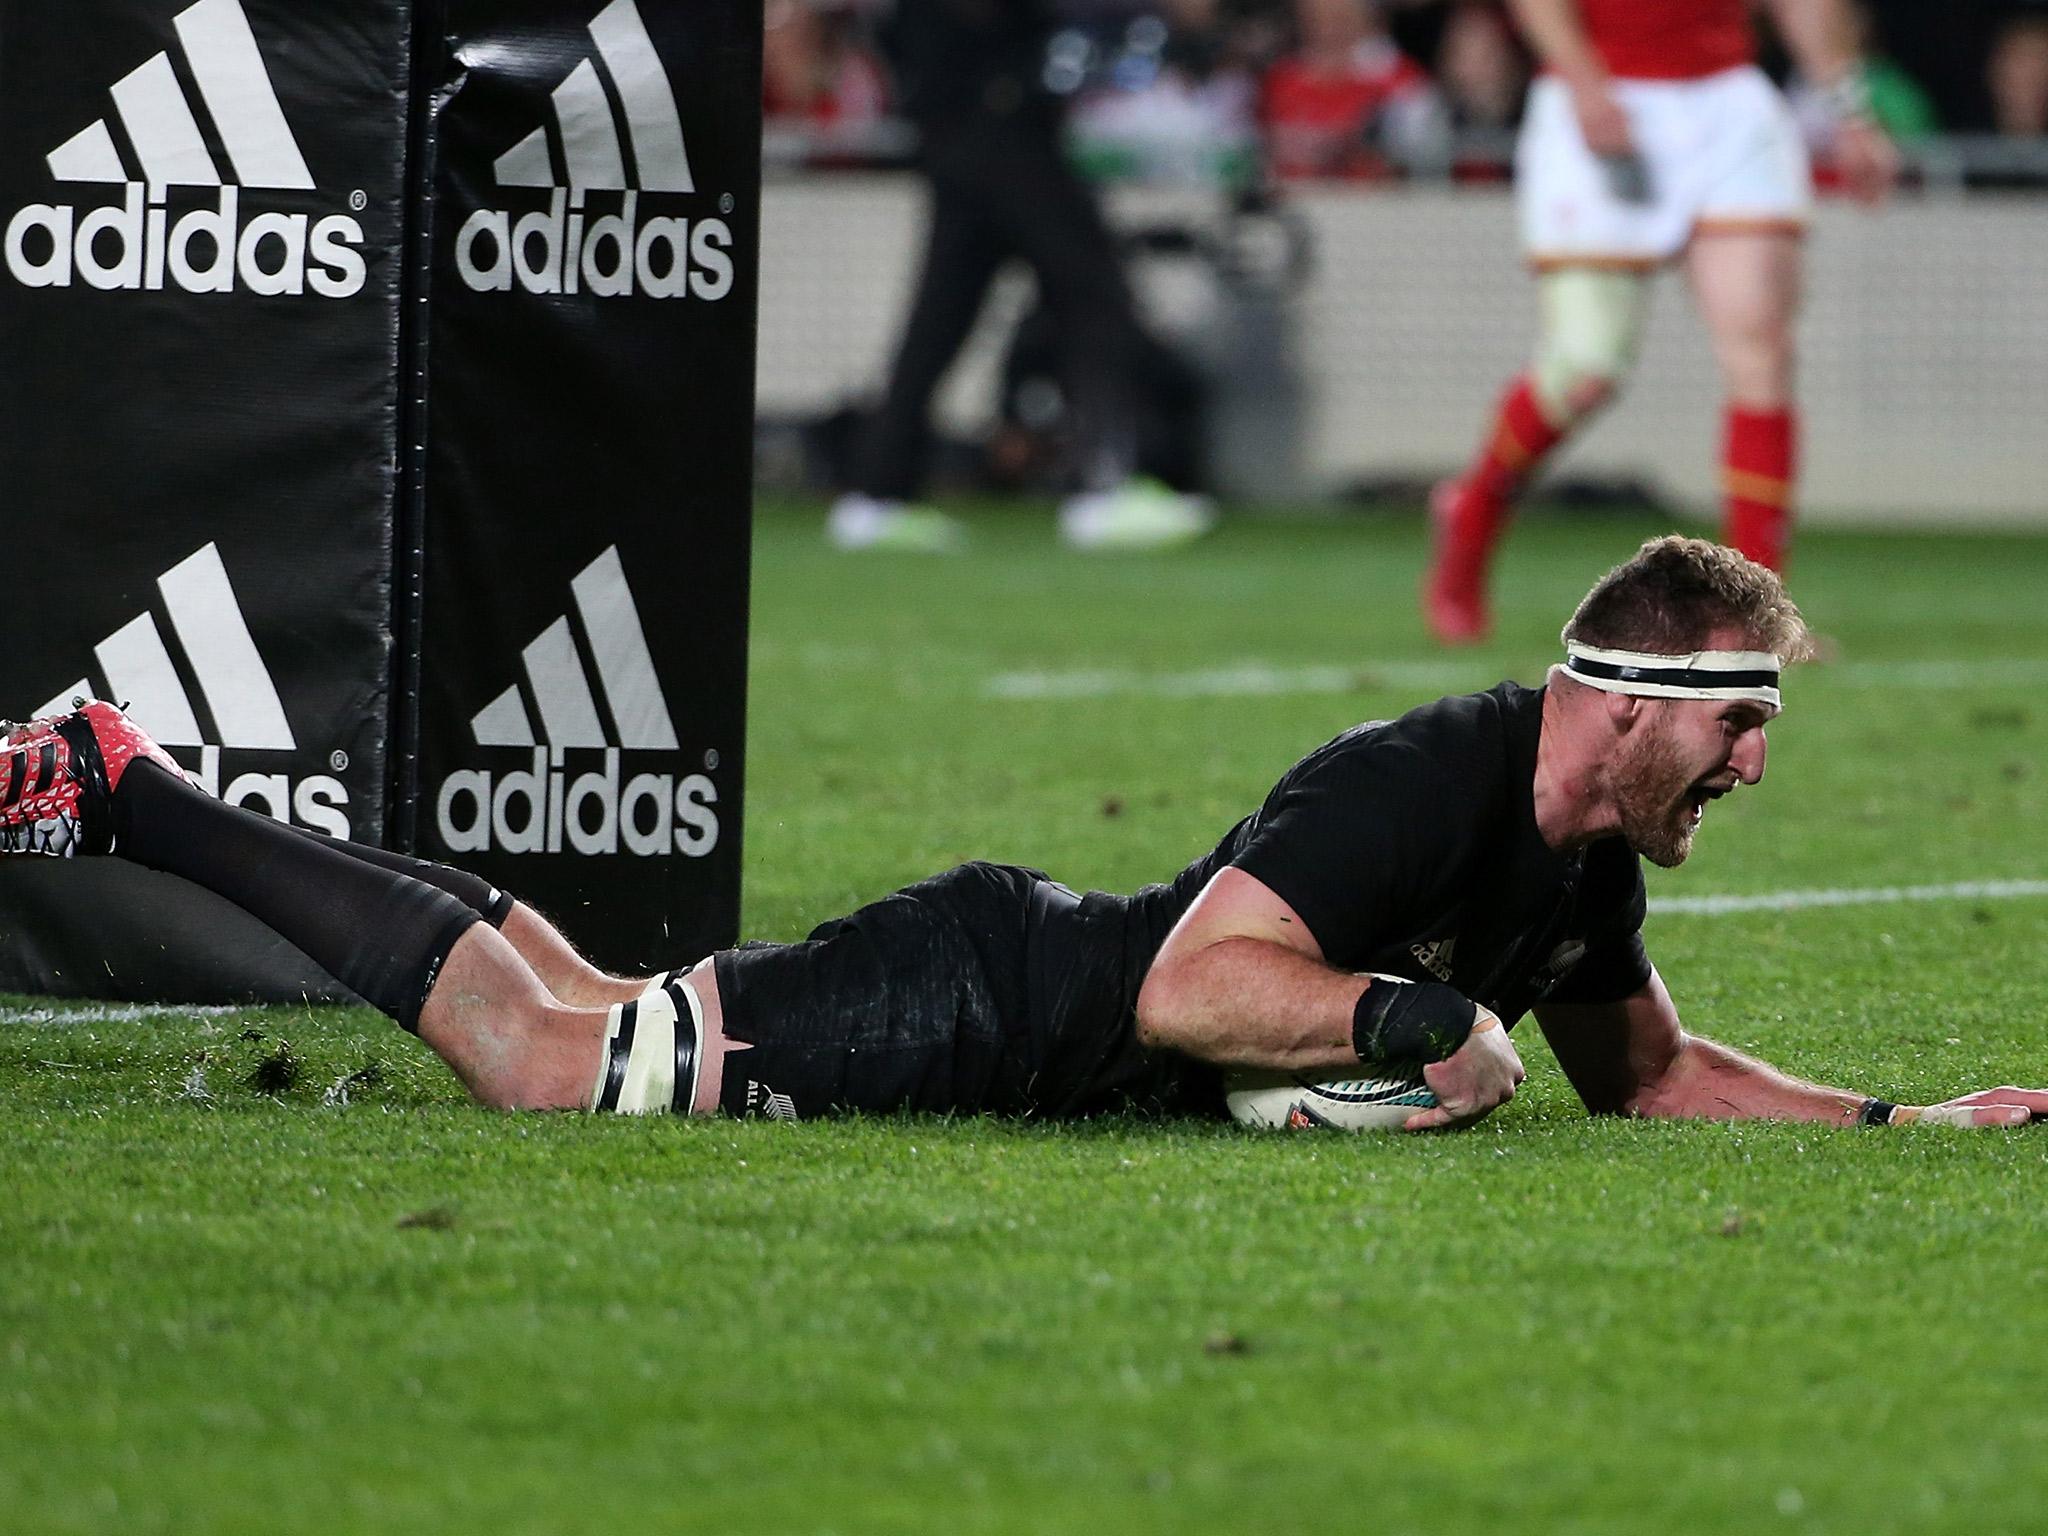 New Zealand captain Kieran Read scores a try against Wales